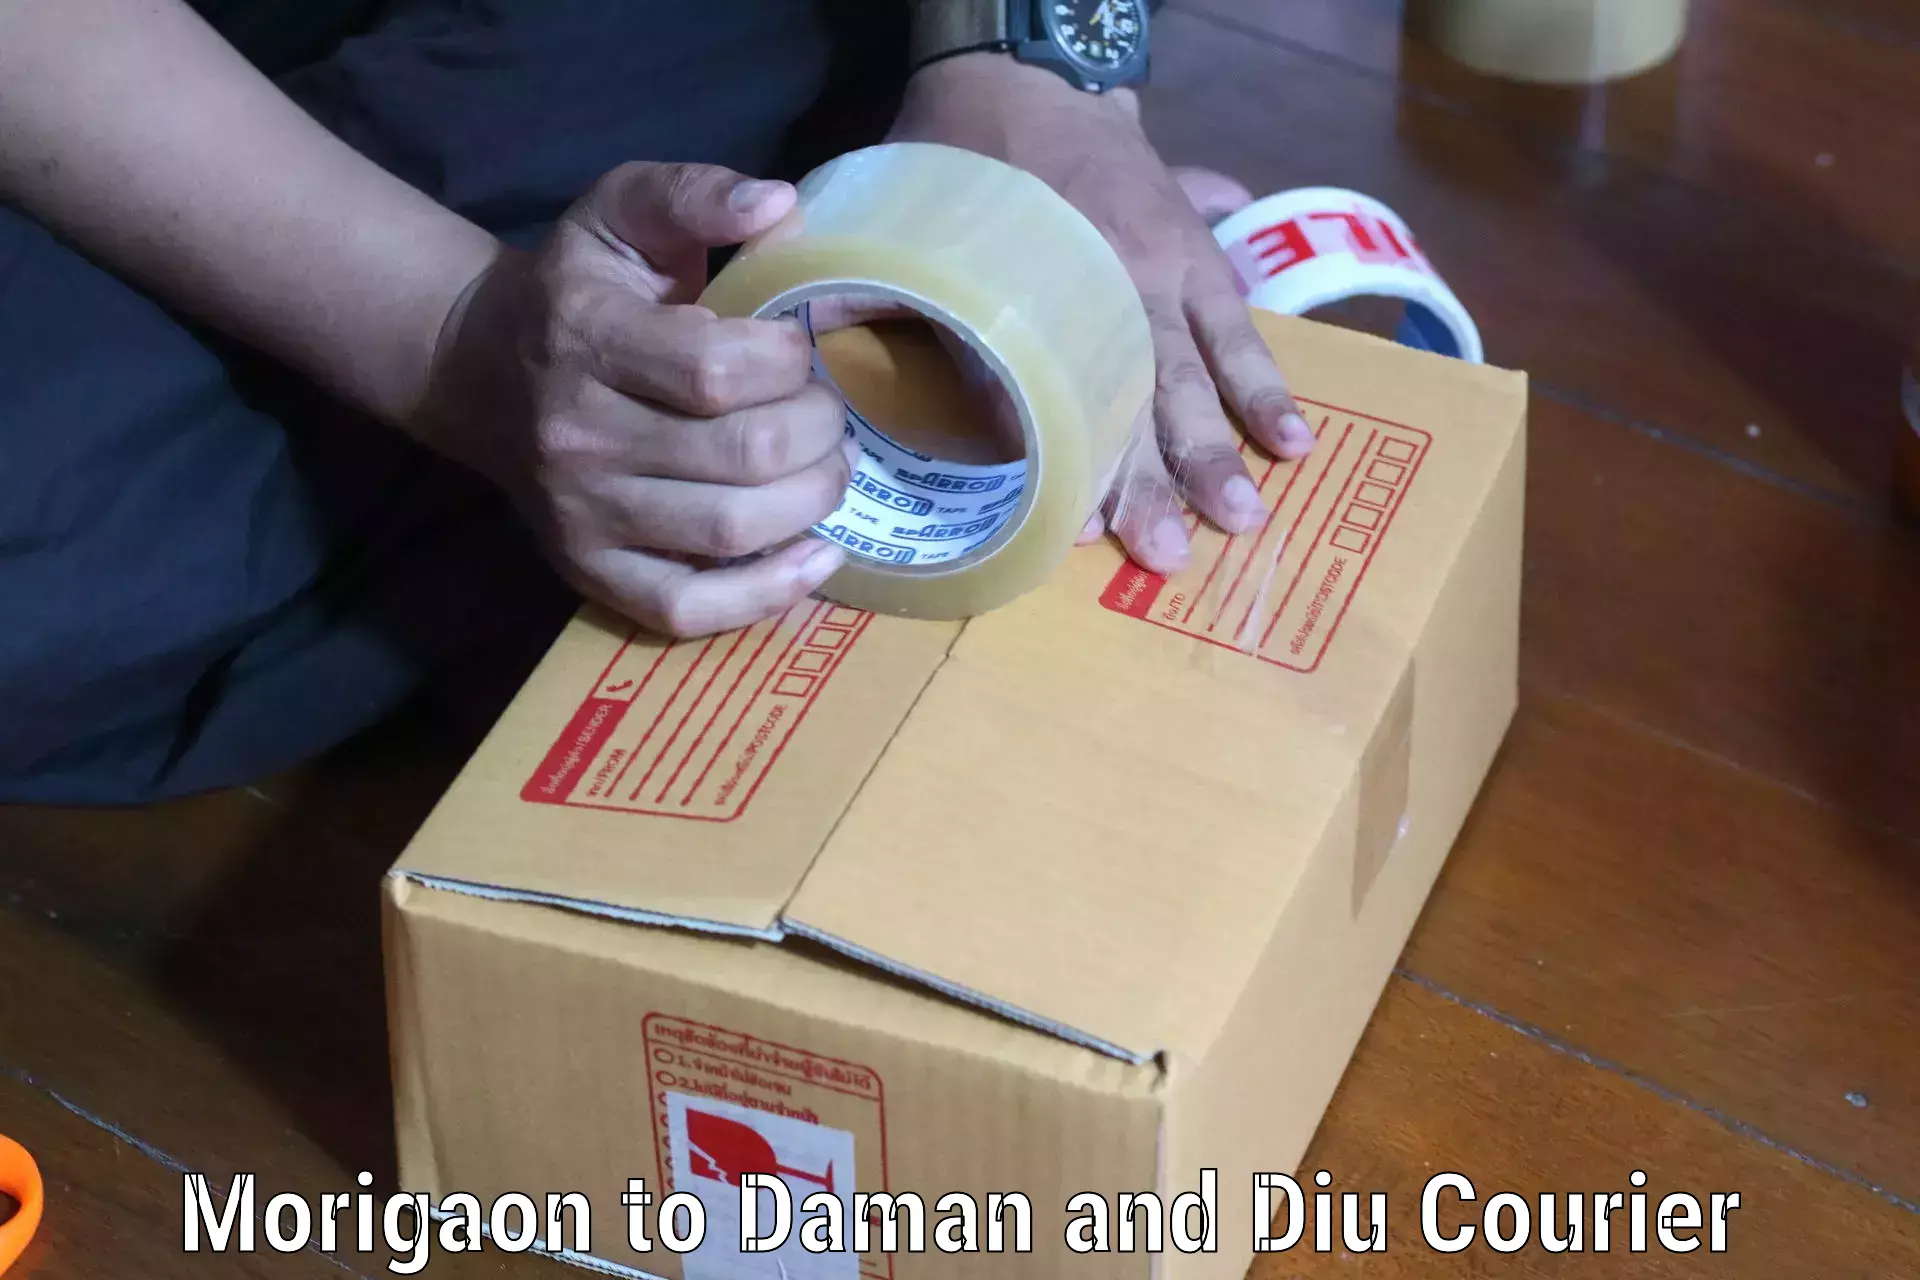 Efficient order fulfillment Morigaon to Daman and Diu